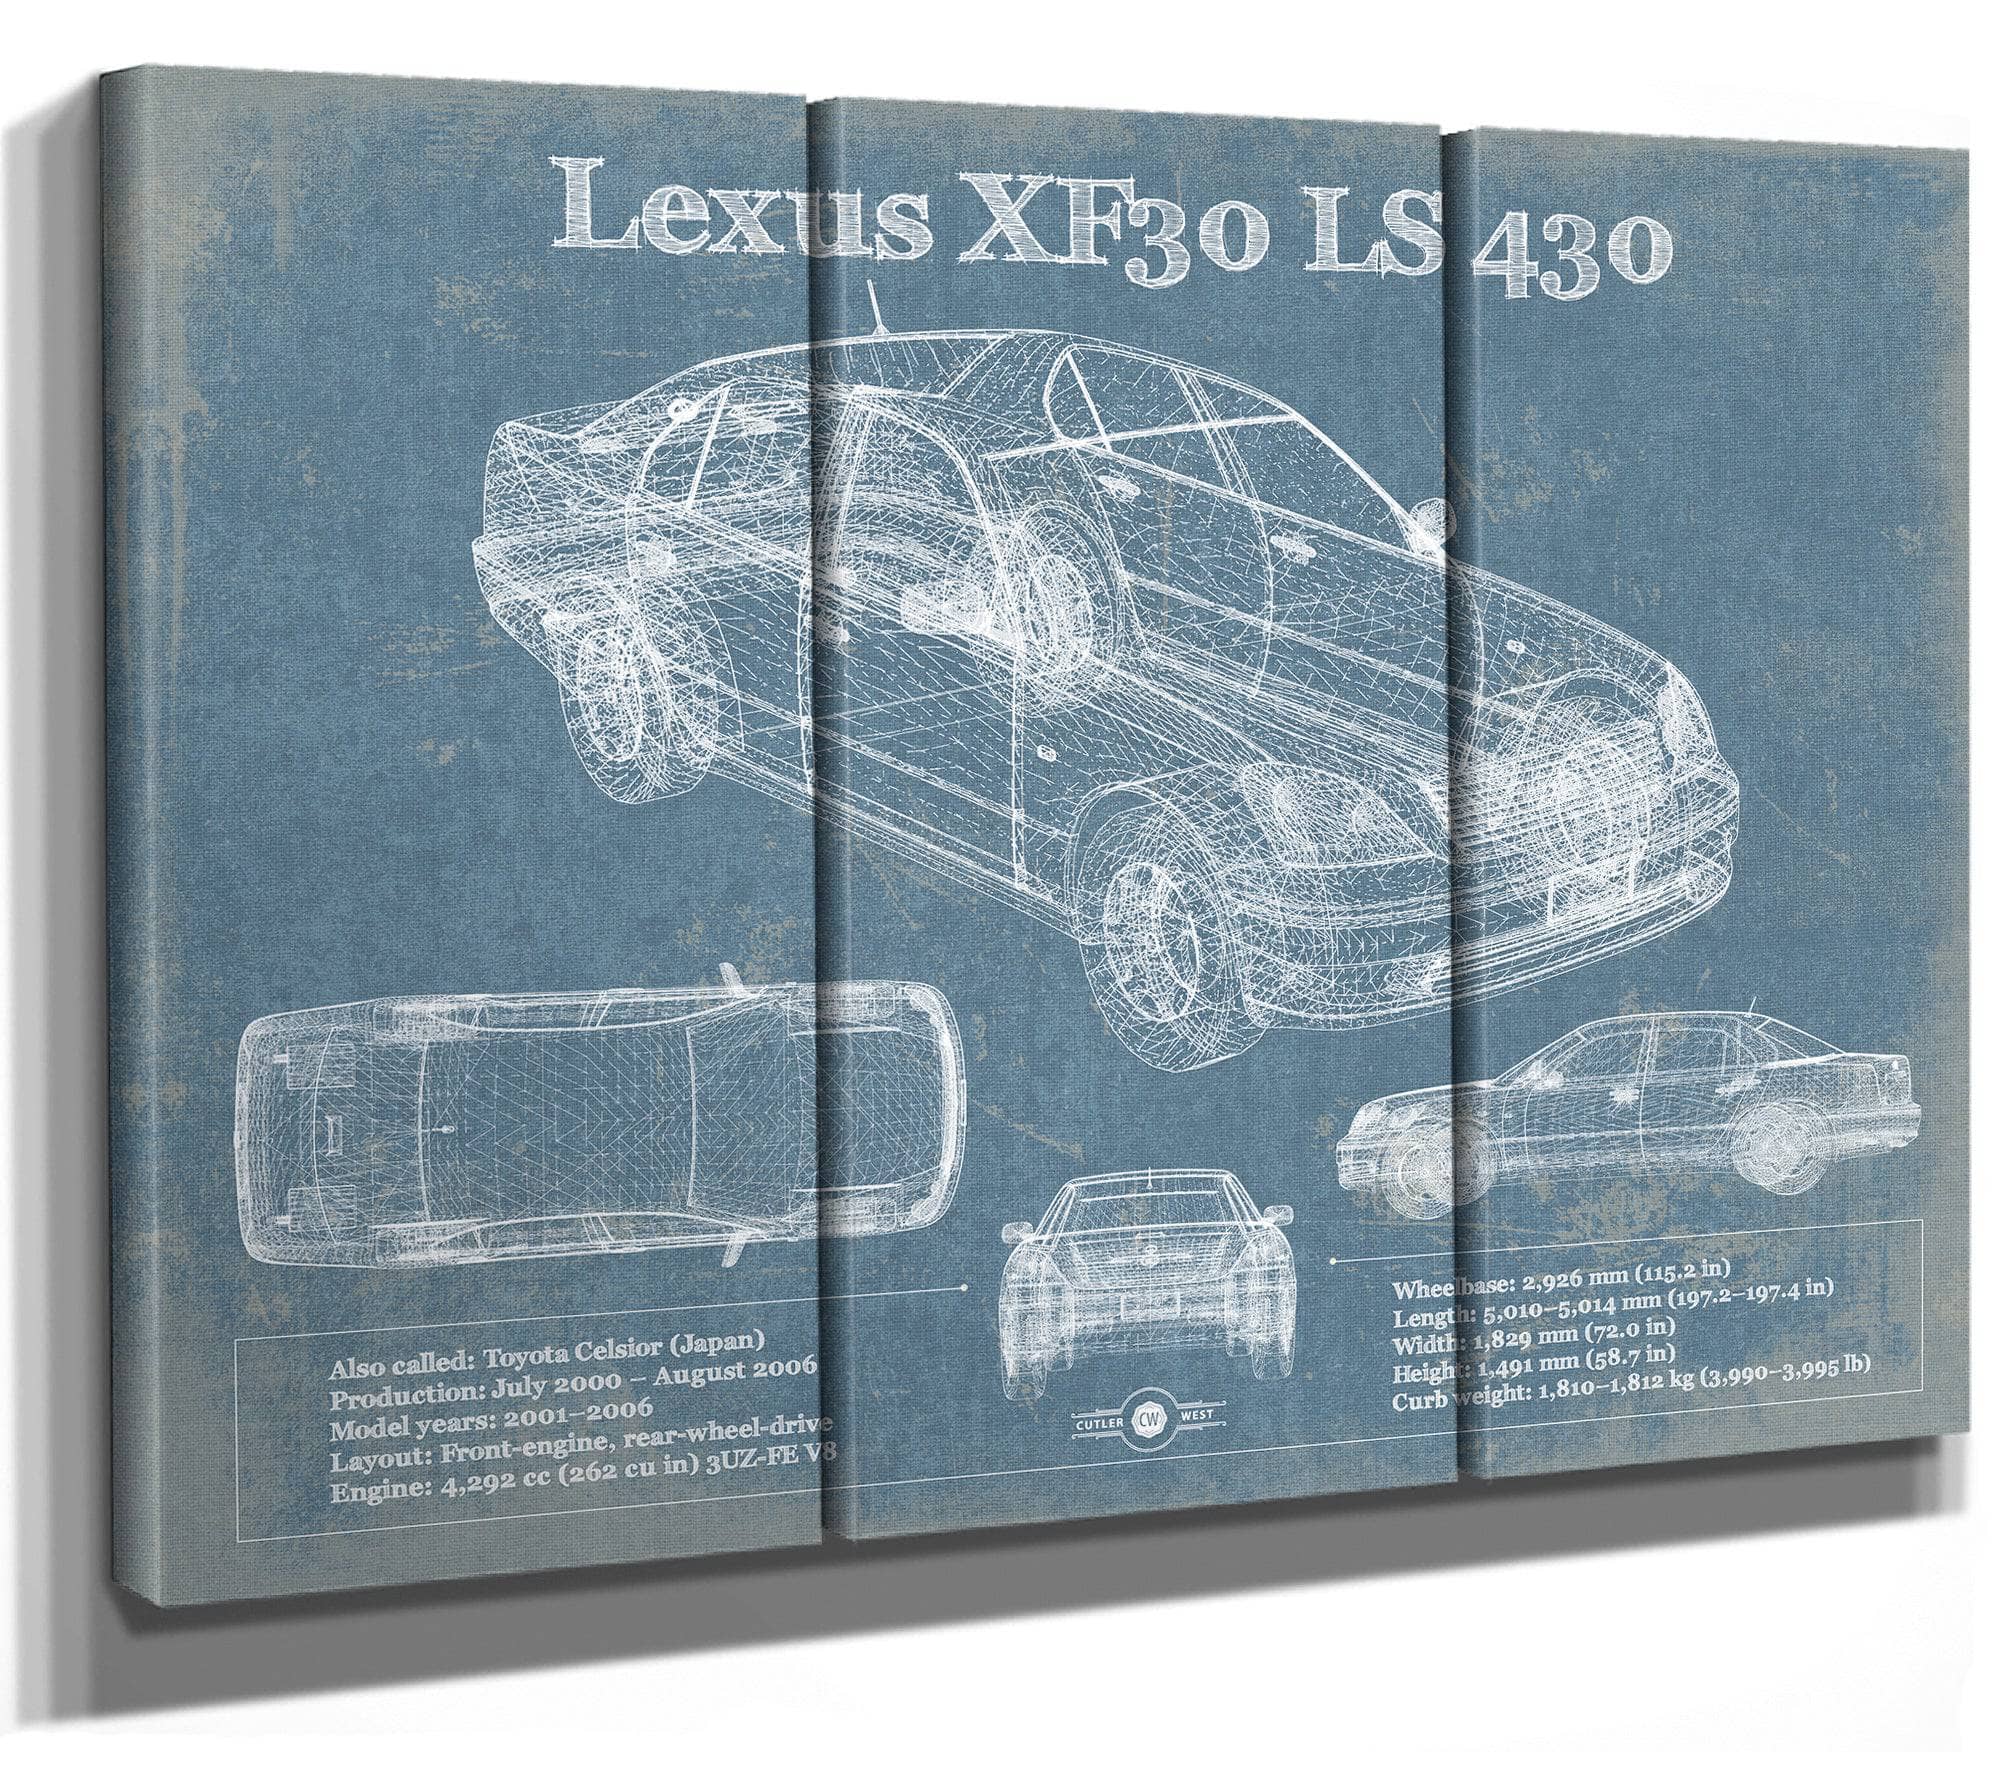 Lexus XF30 LS 430 Vintage Blueprint Auto Print